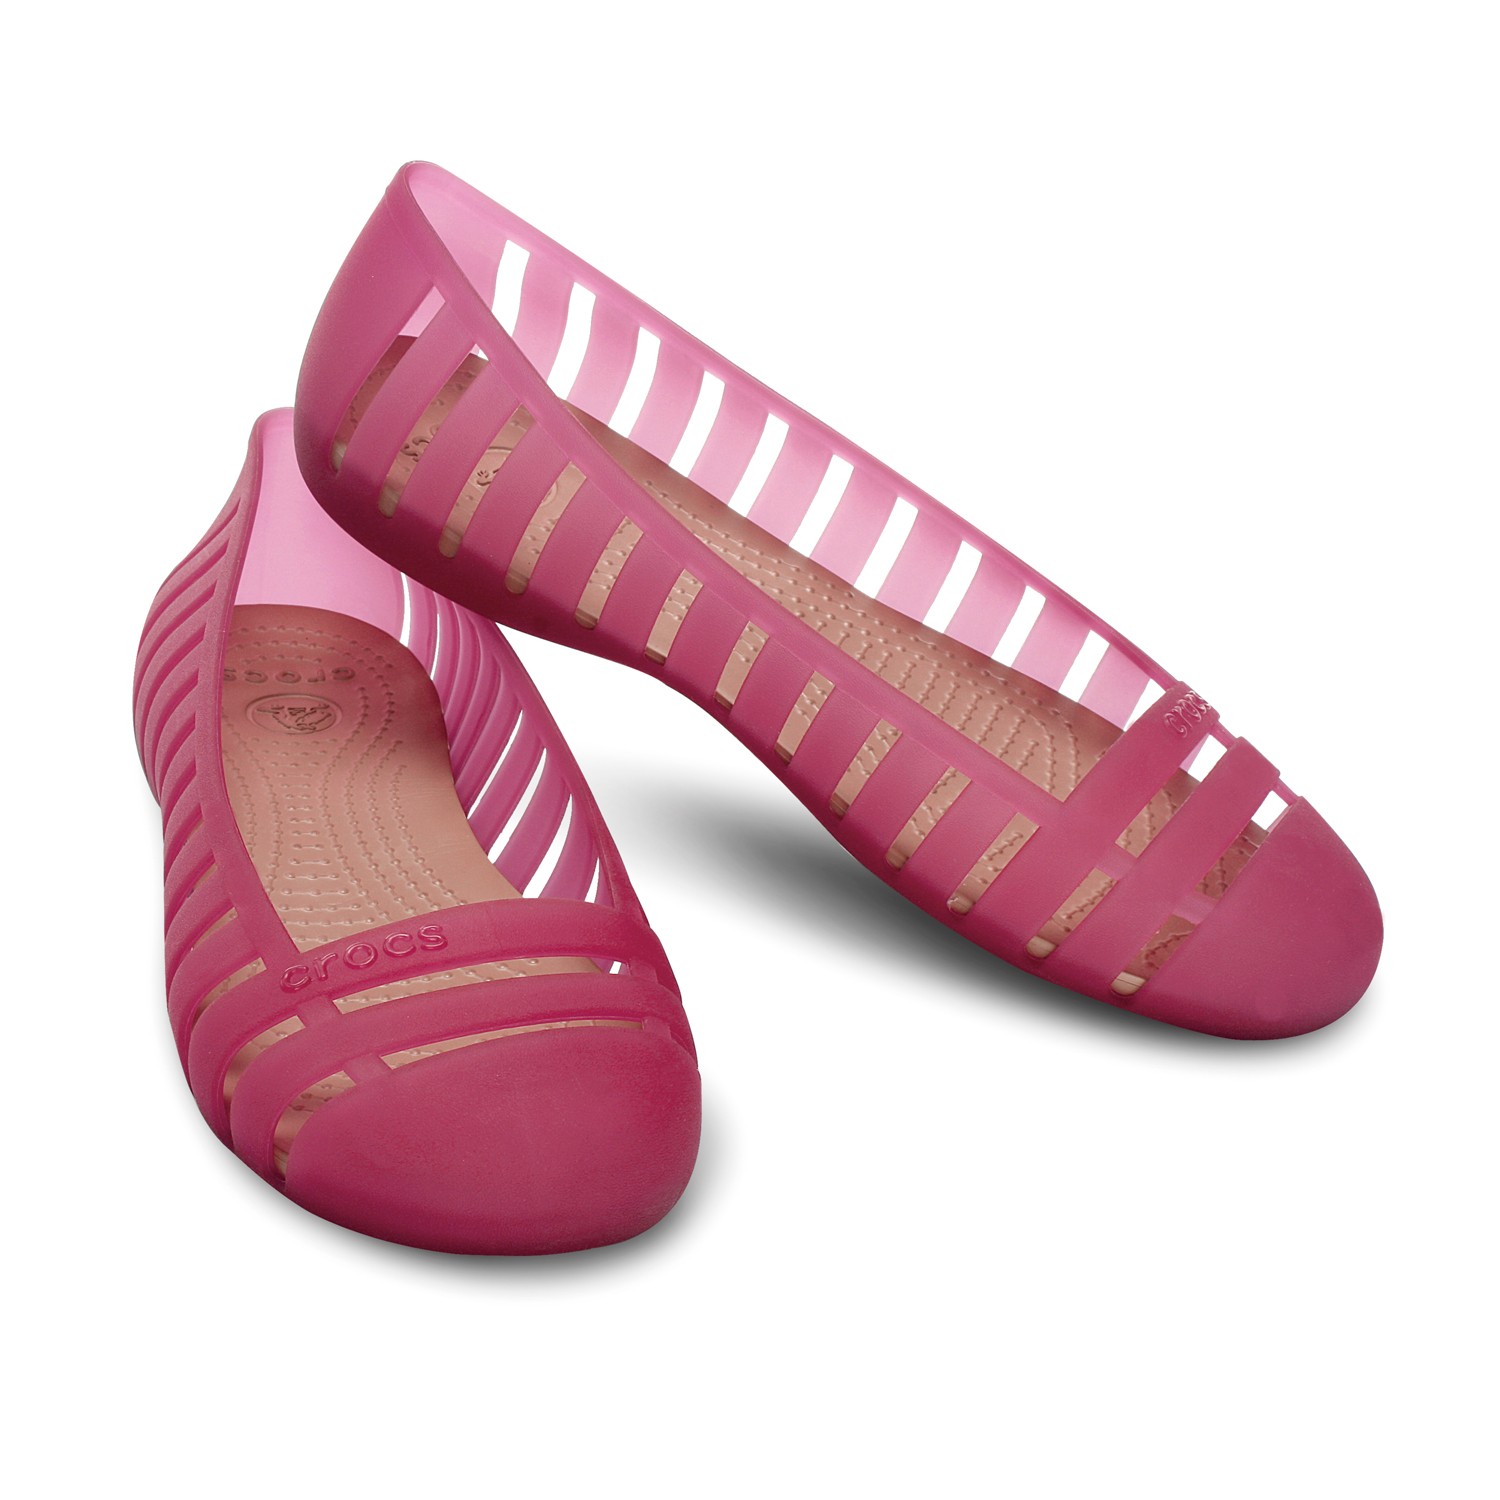 Crocs Adrina Flat II - Sandals - Everyday shoes - Shoes - Timarco.eu